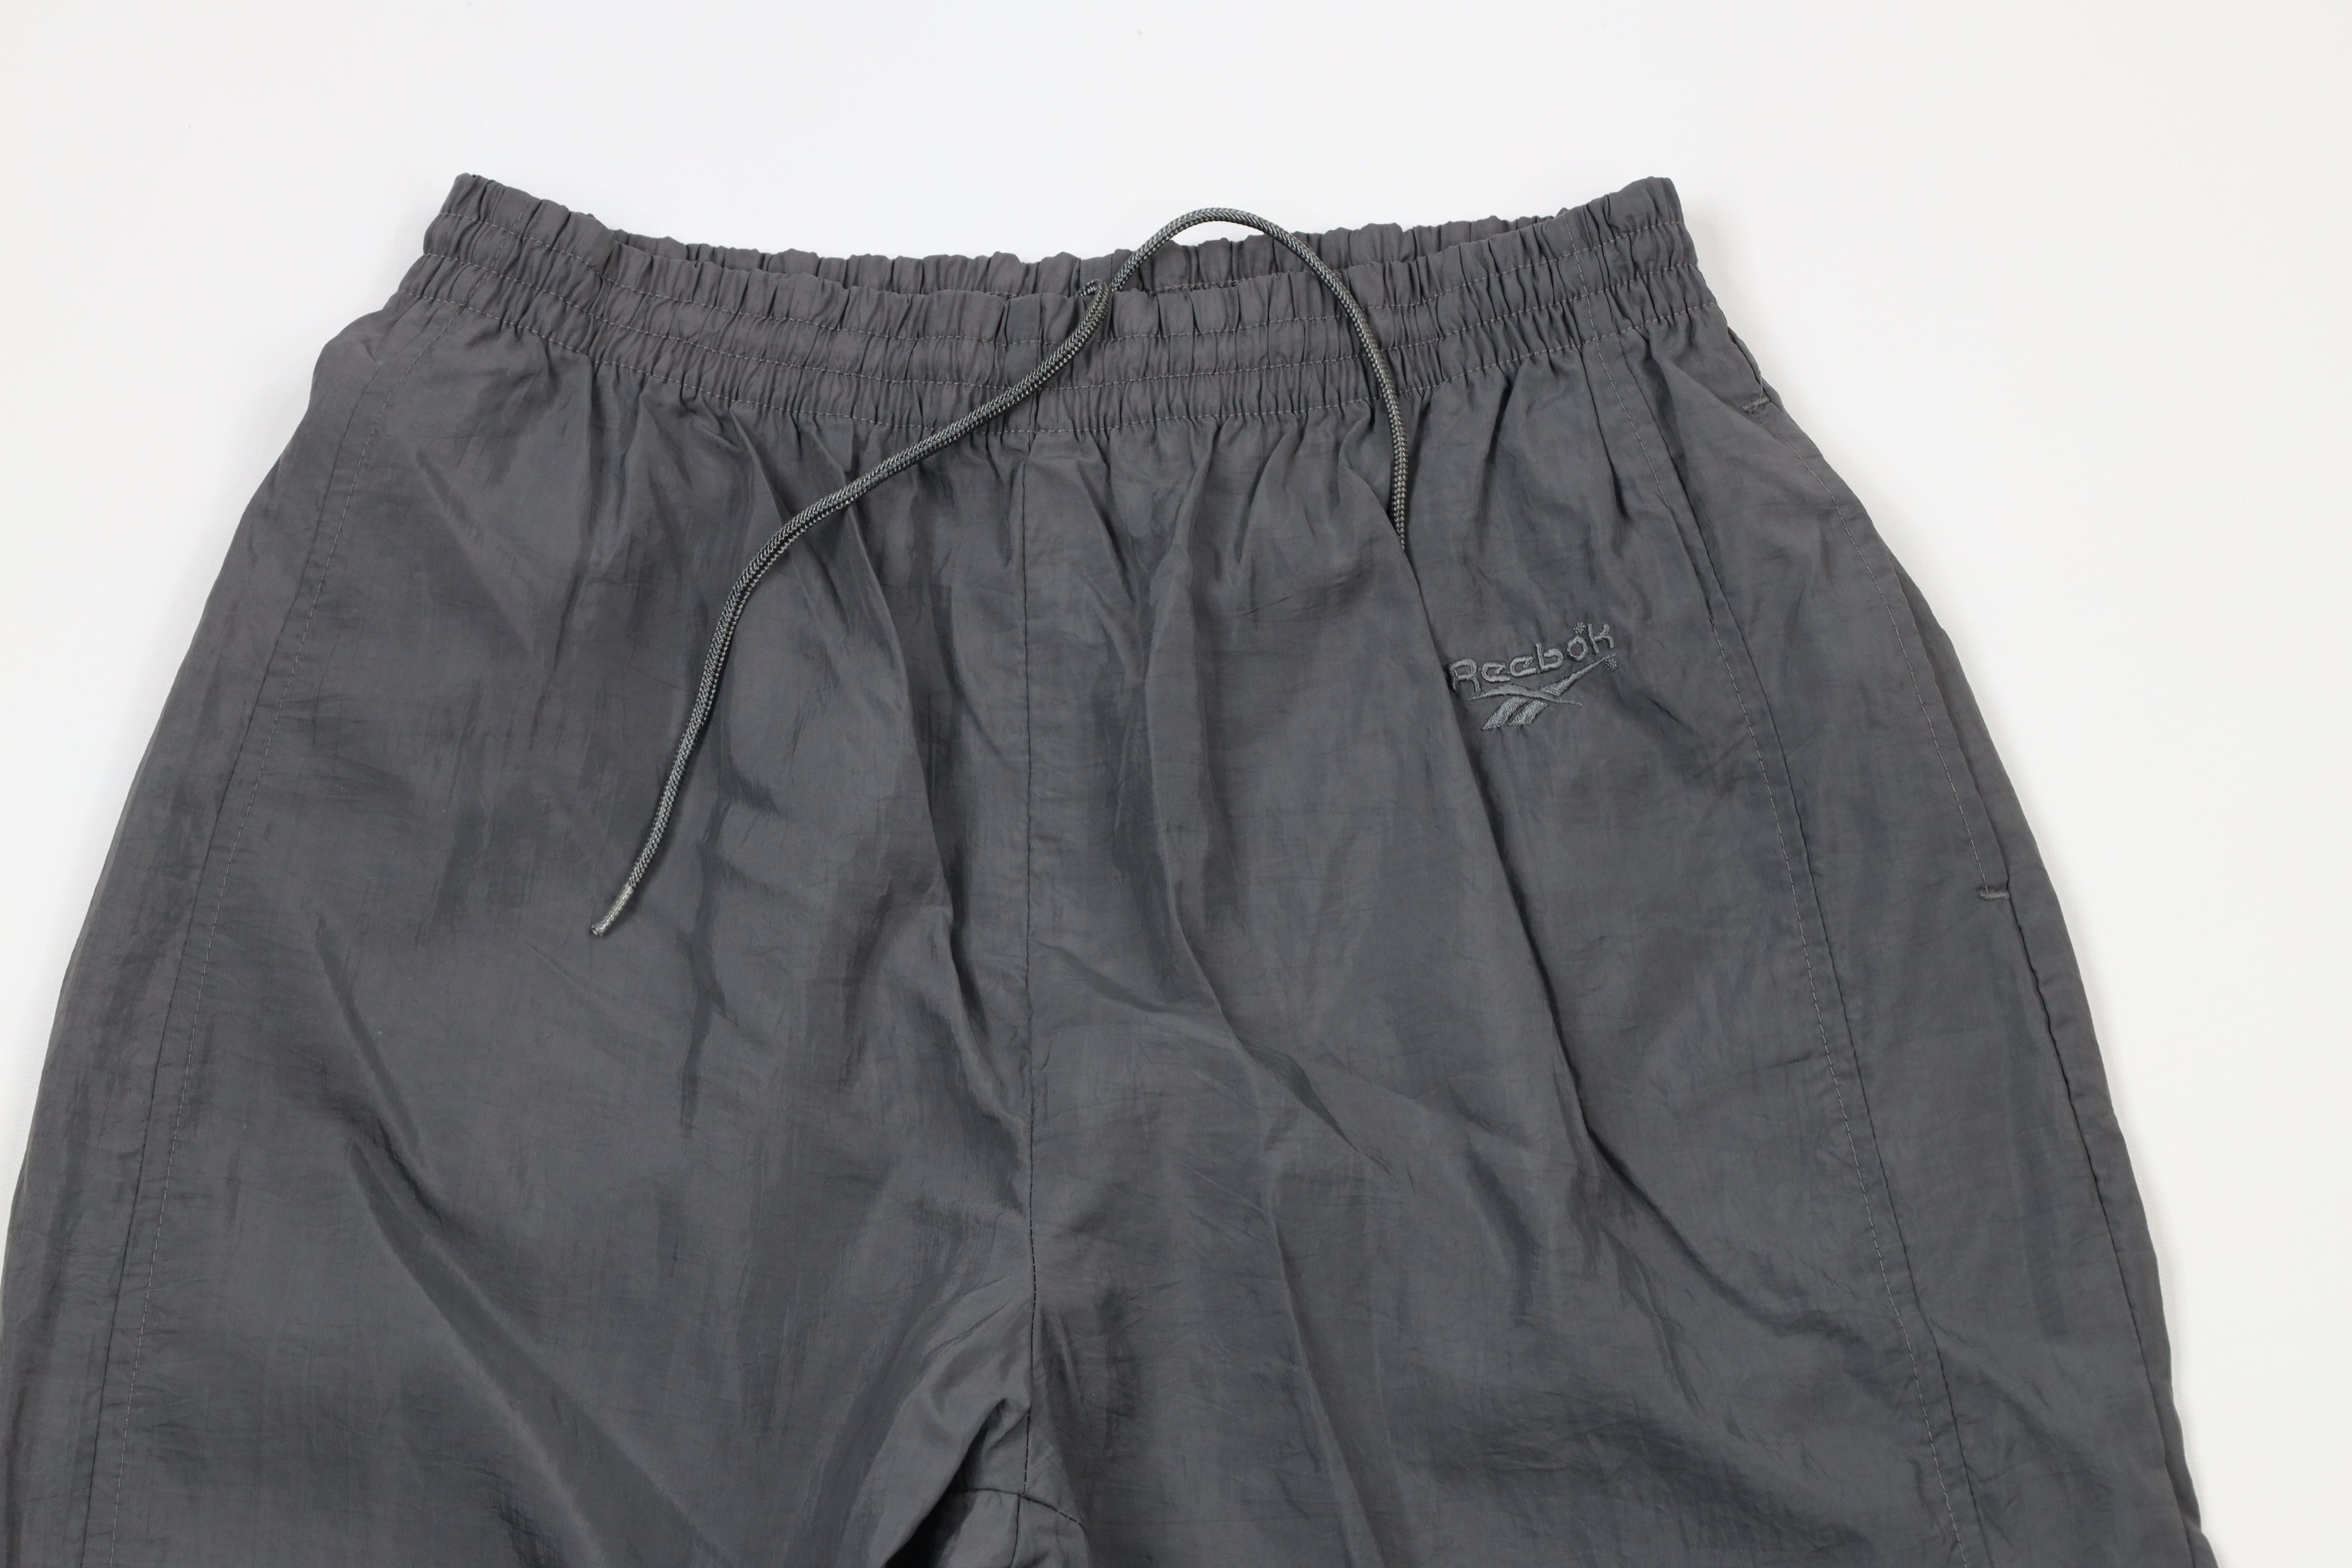 Vintage Vintage 90s Reebok Cuffed Nylon Joggers Jogger Pants Gray Size US 34 / EU 50 - 2 Preview